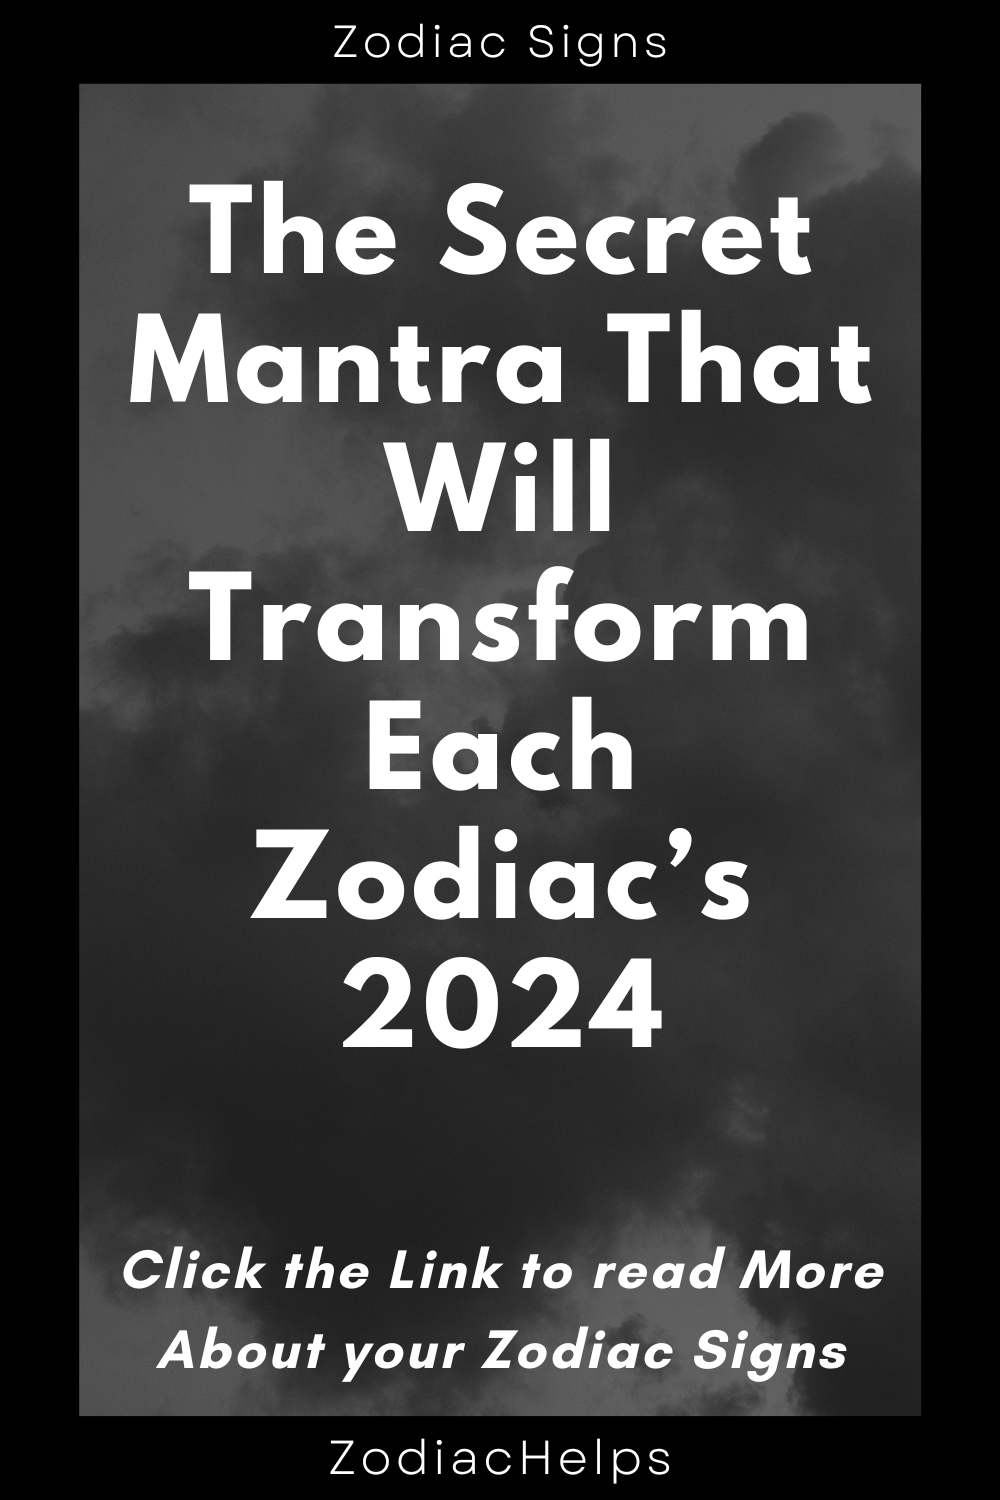 The Secret Mantra That Will Transform Each Zodiac’s 2024